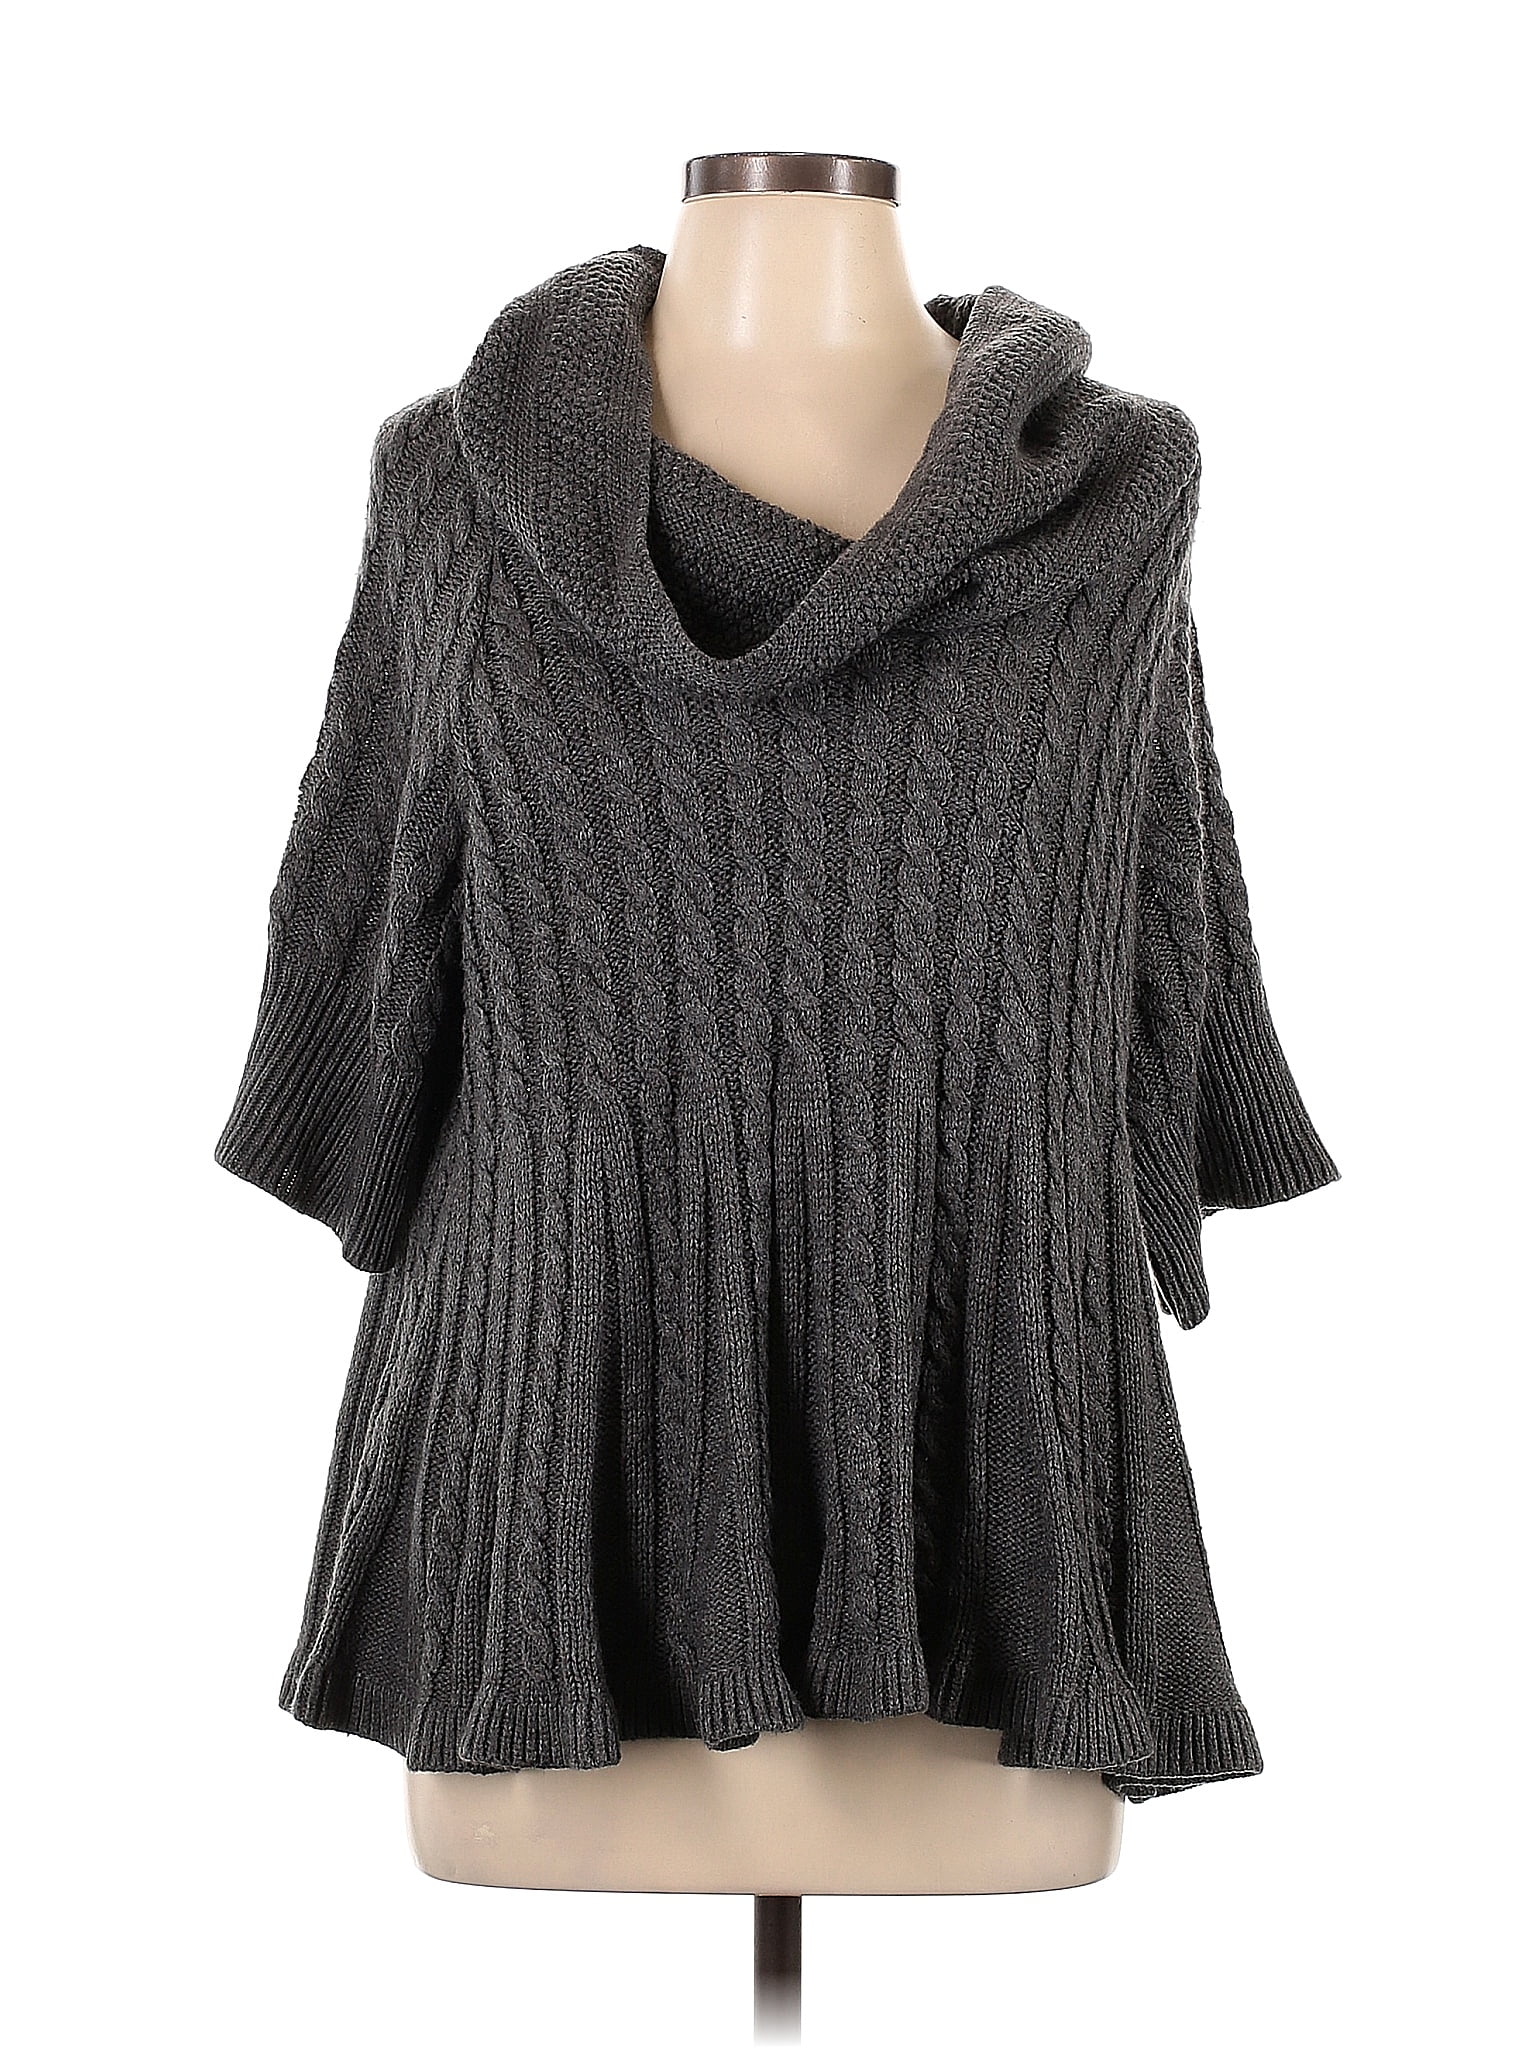 Ashley Stewart 100% Acrylic Gray Turtleneck Sweater Size 12 (Plus) - 64 ...